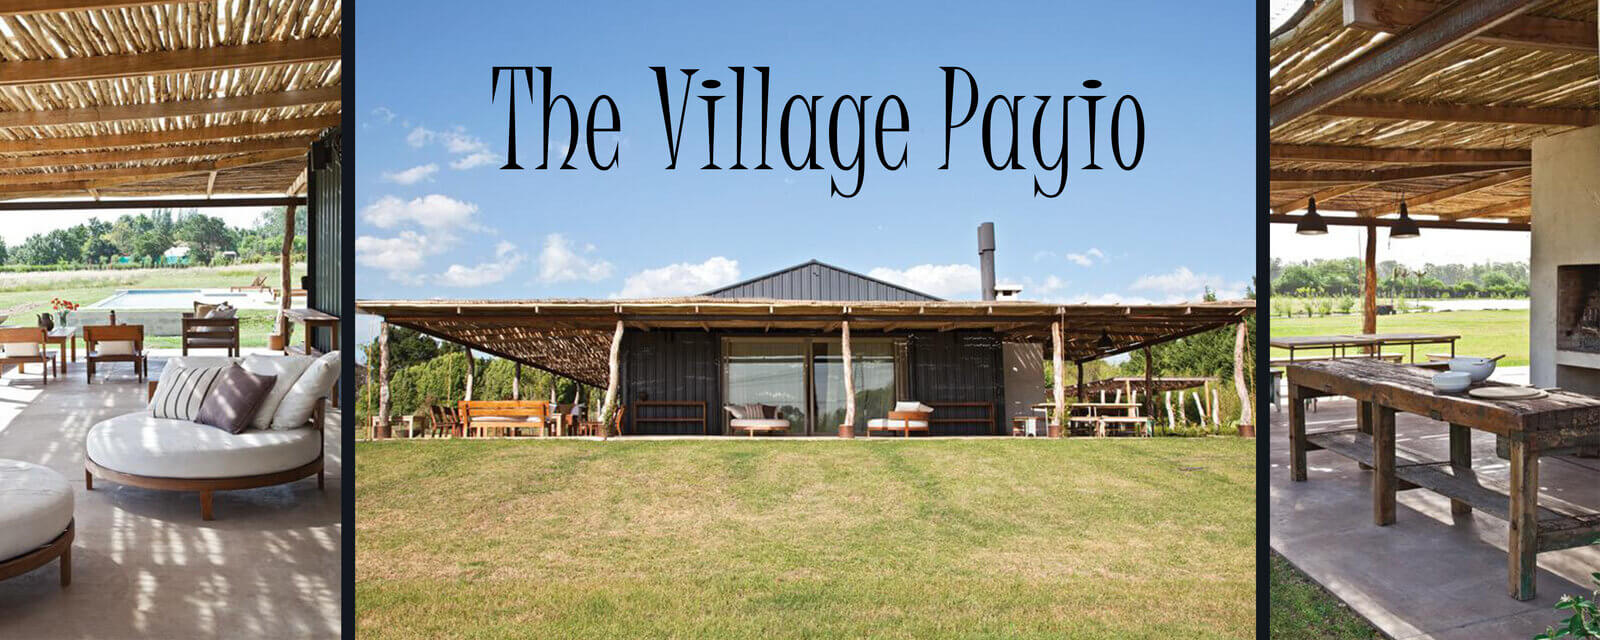 The Village Patio